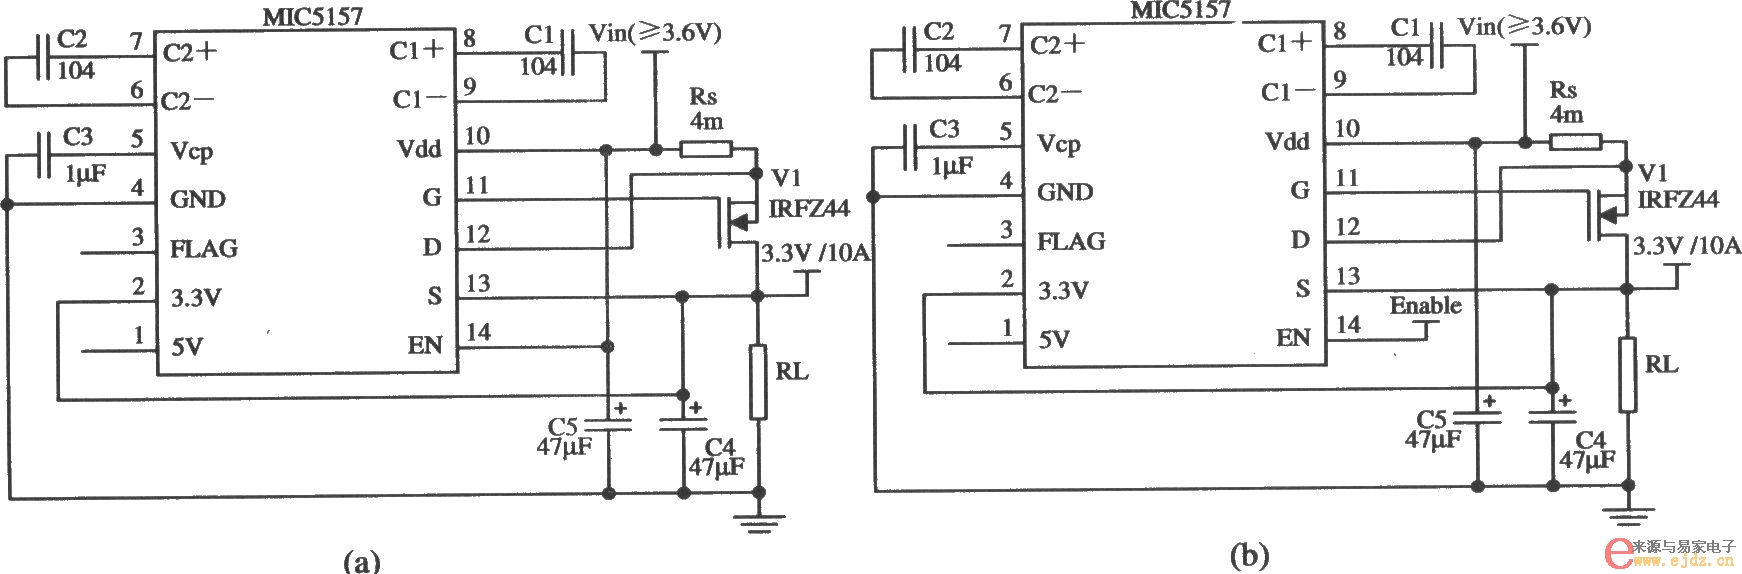 MIC5157构成的输出3.3 V／lOA的线性稳压器电路图